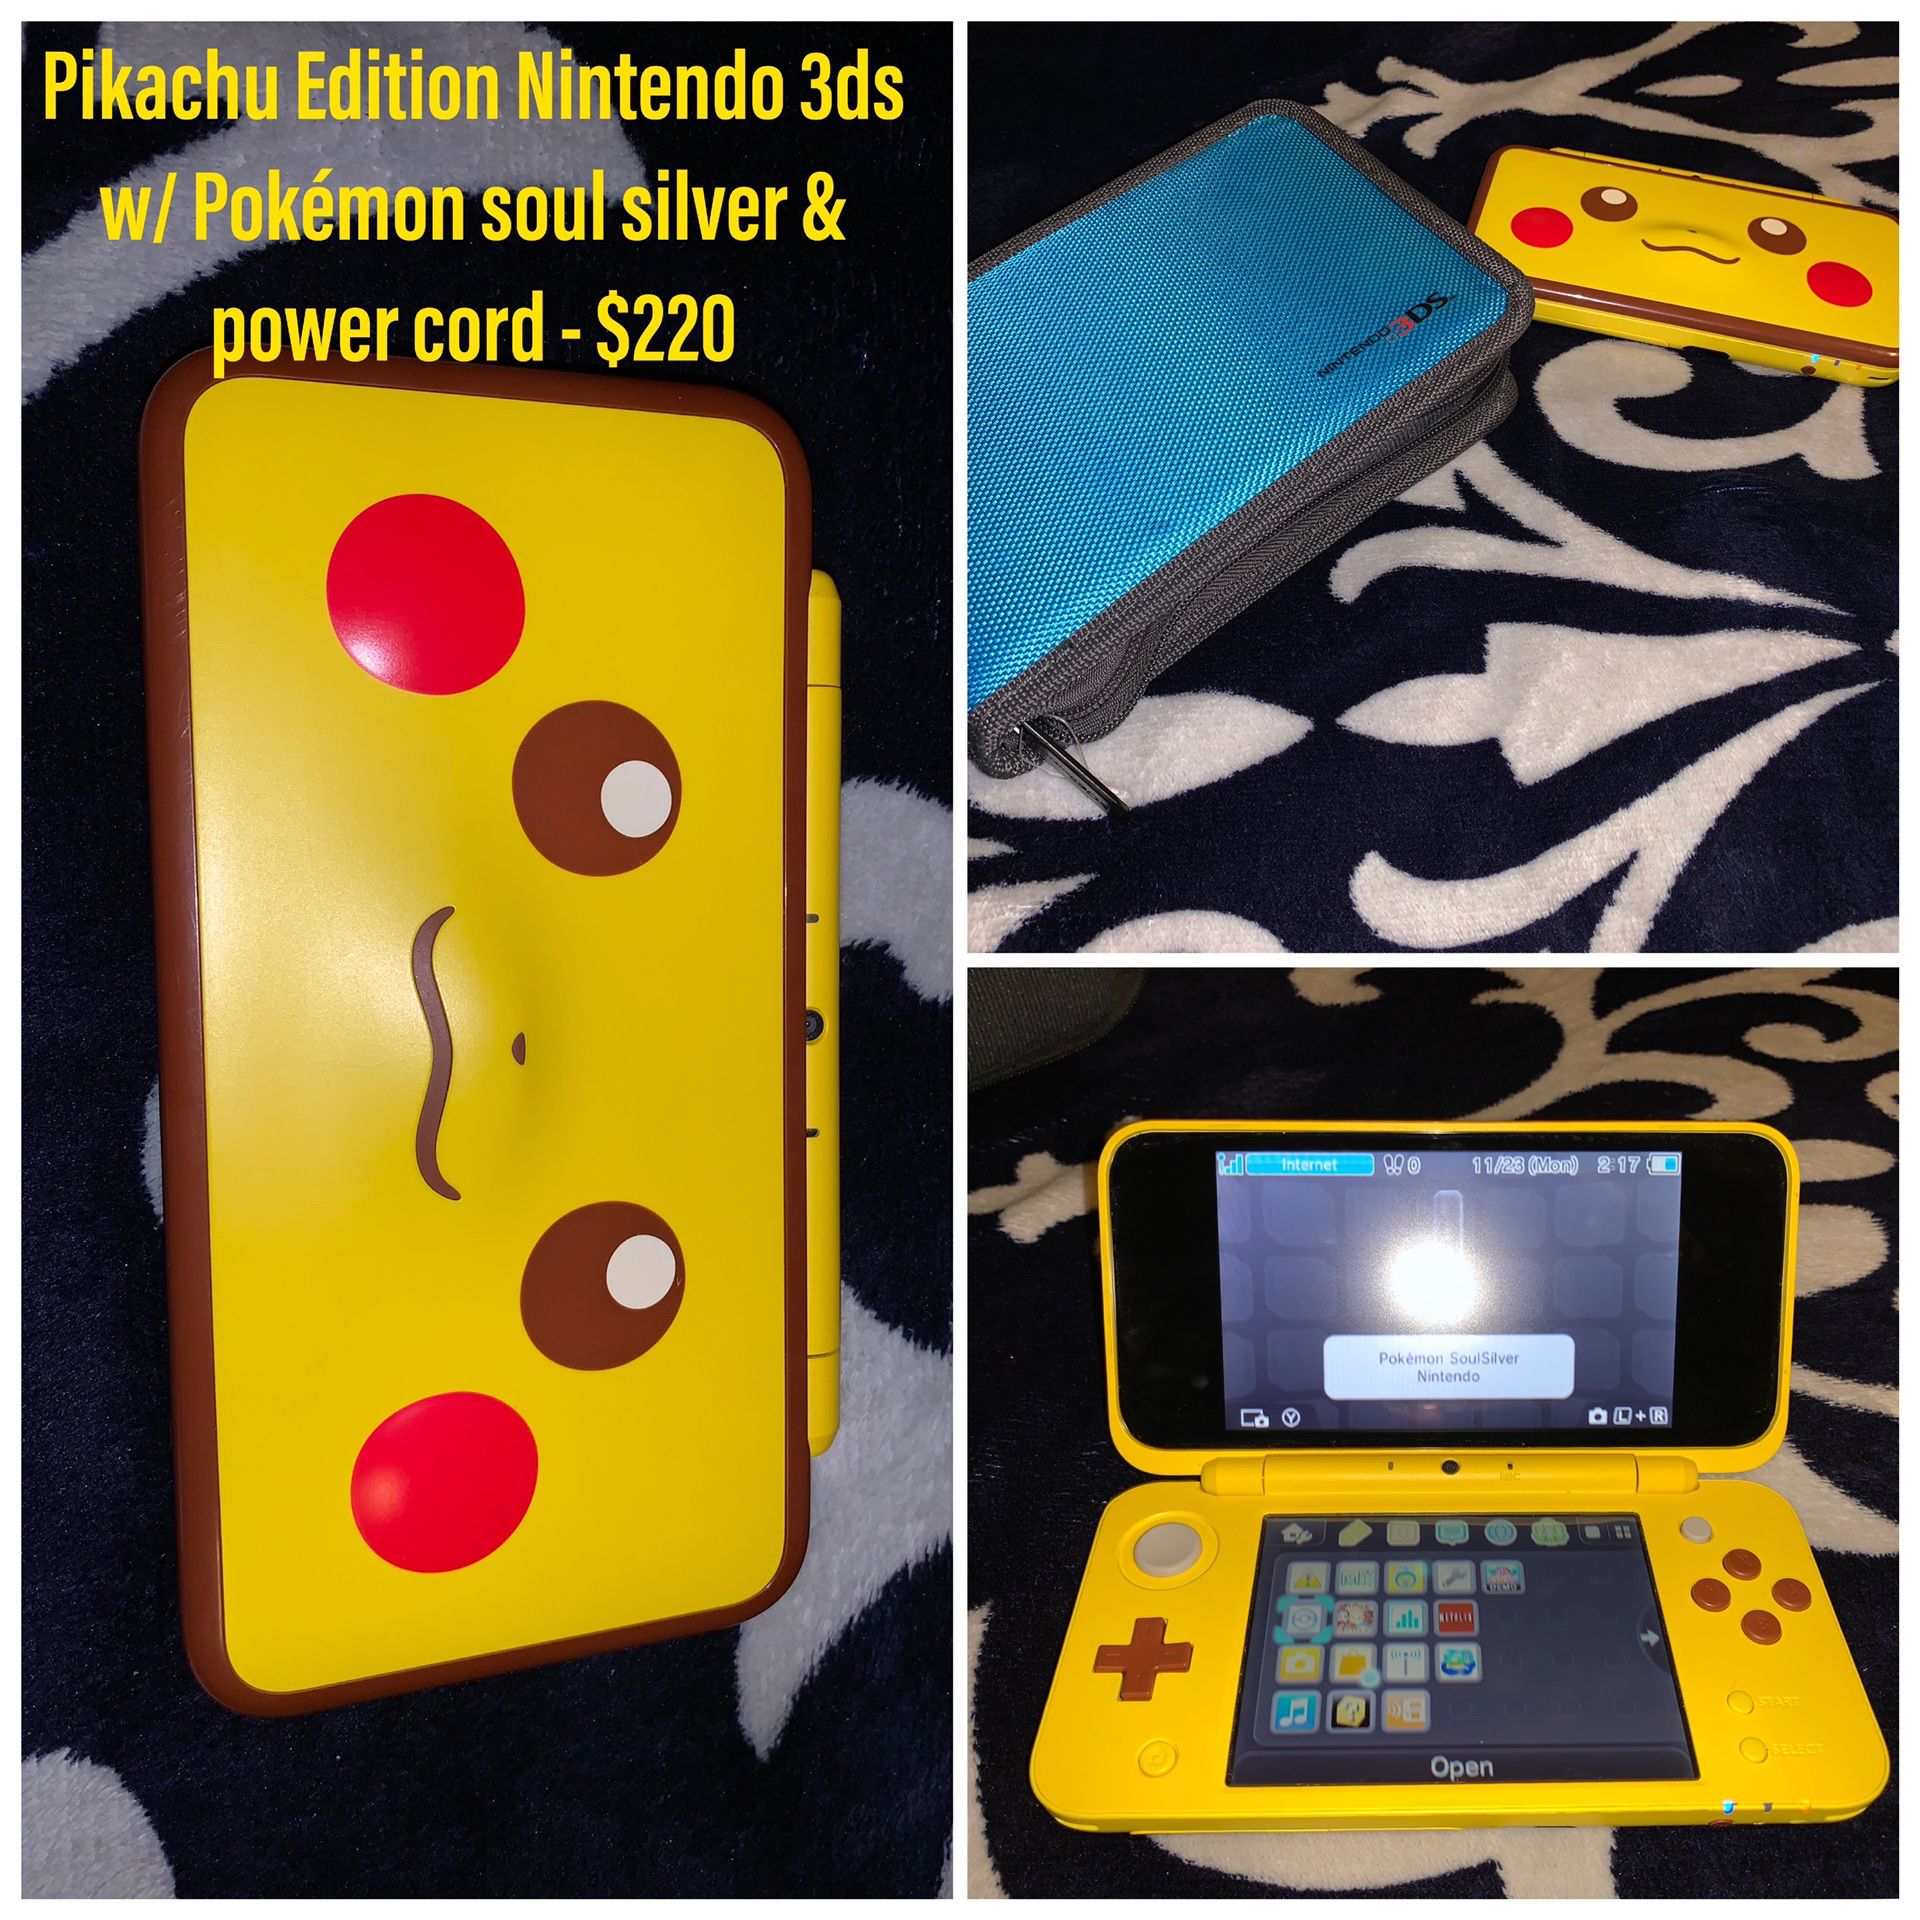 Nintendo 3ds Pikachu Edition